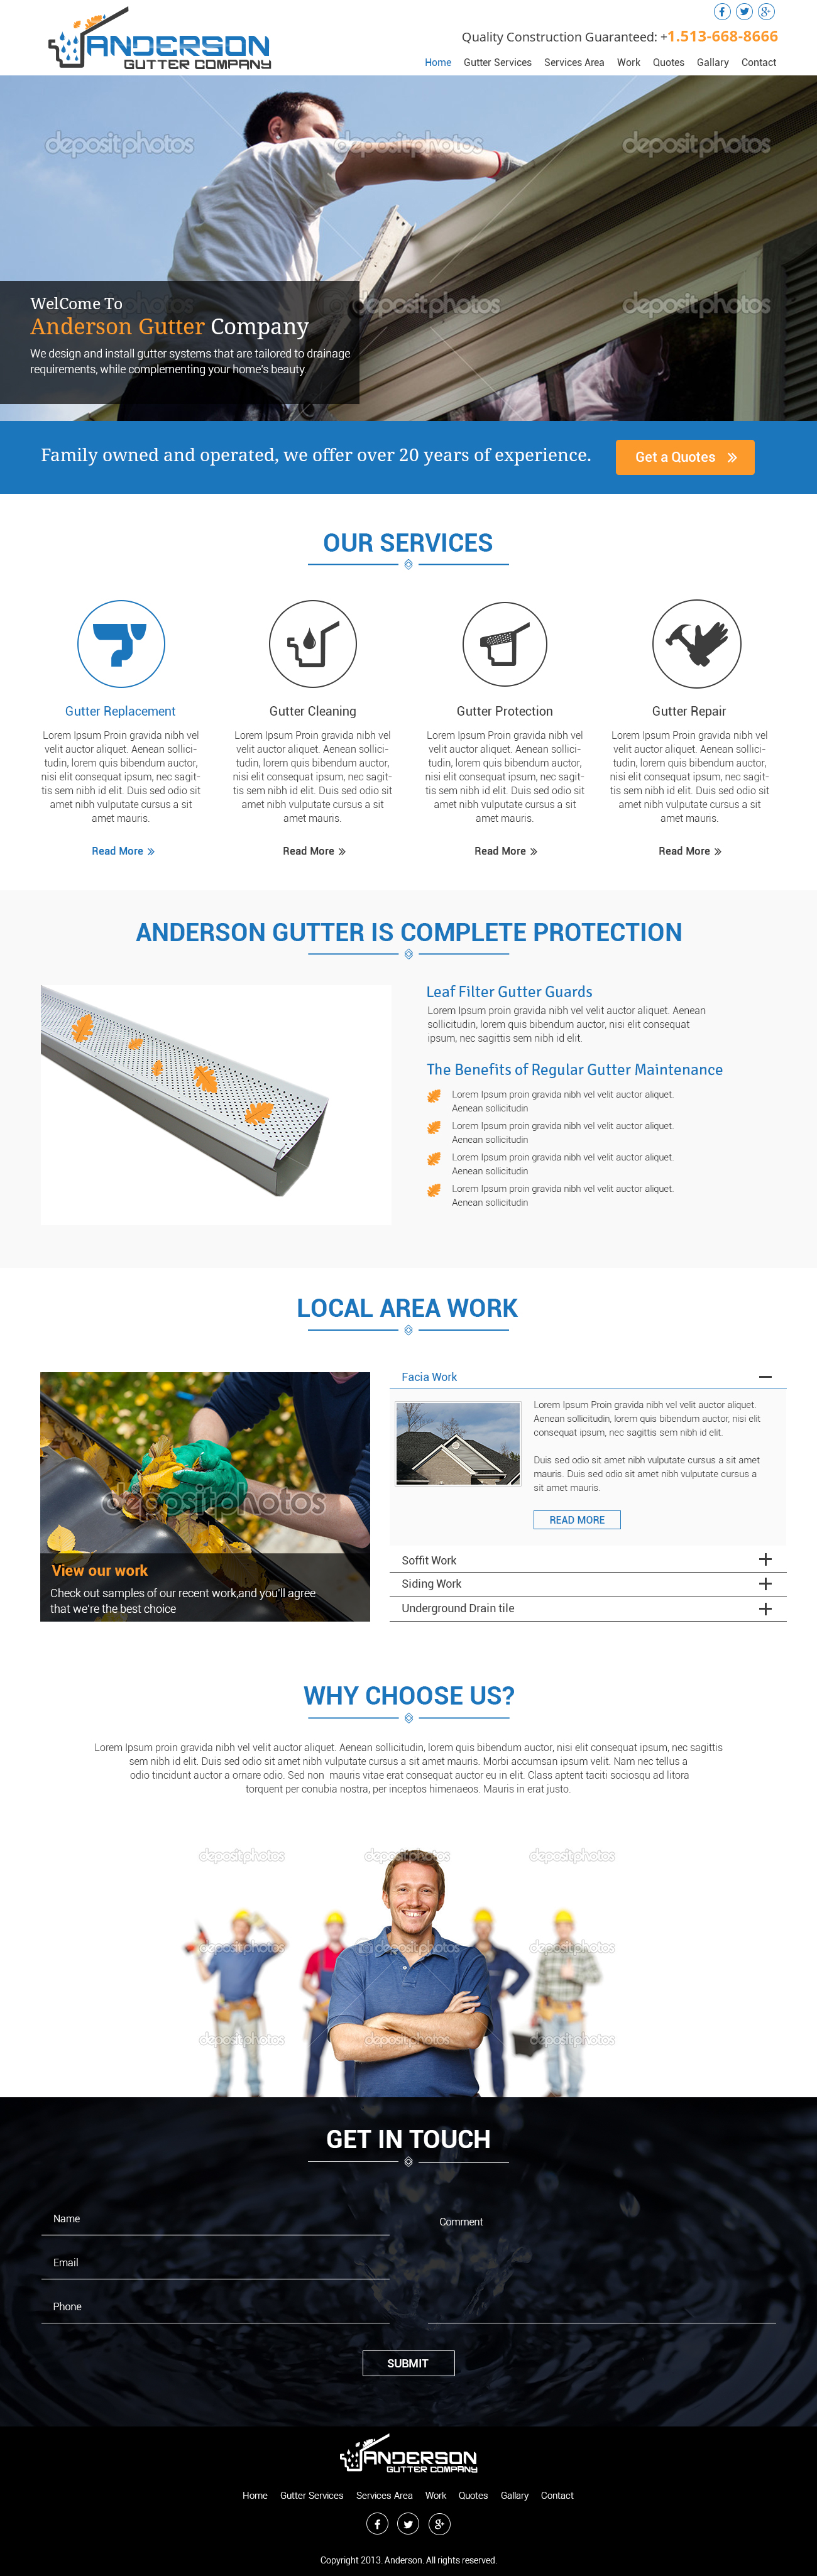 Anderson Gutter Website